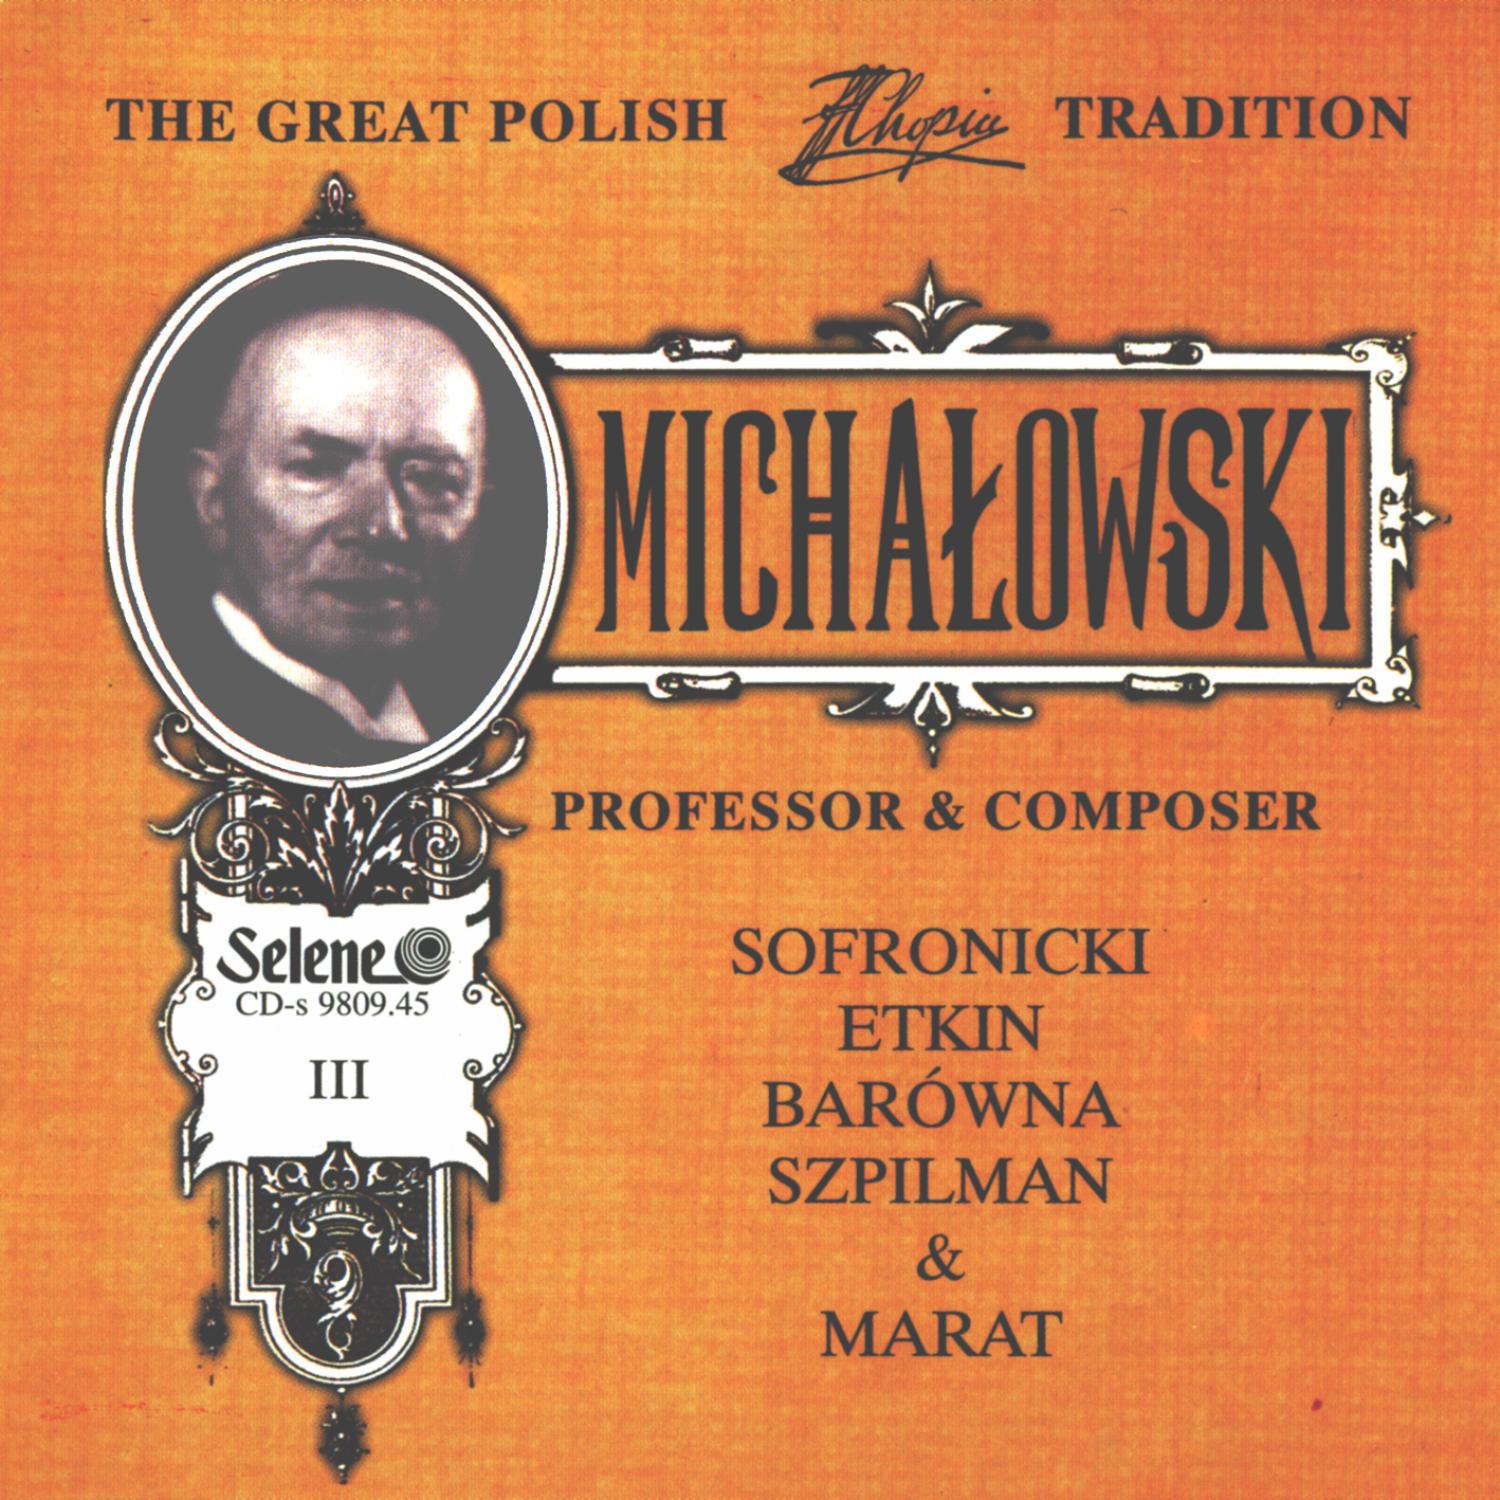 The Great Polish Chopin Tradition: Aleksander Michalowski vol. 3